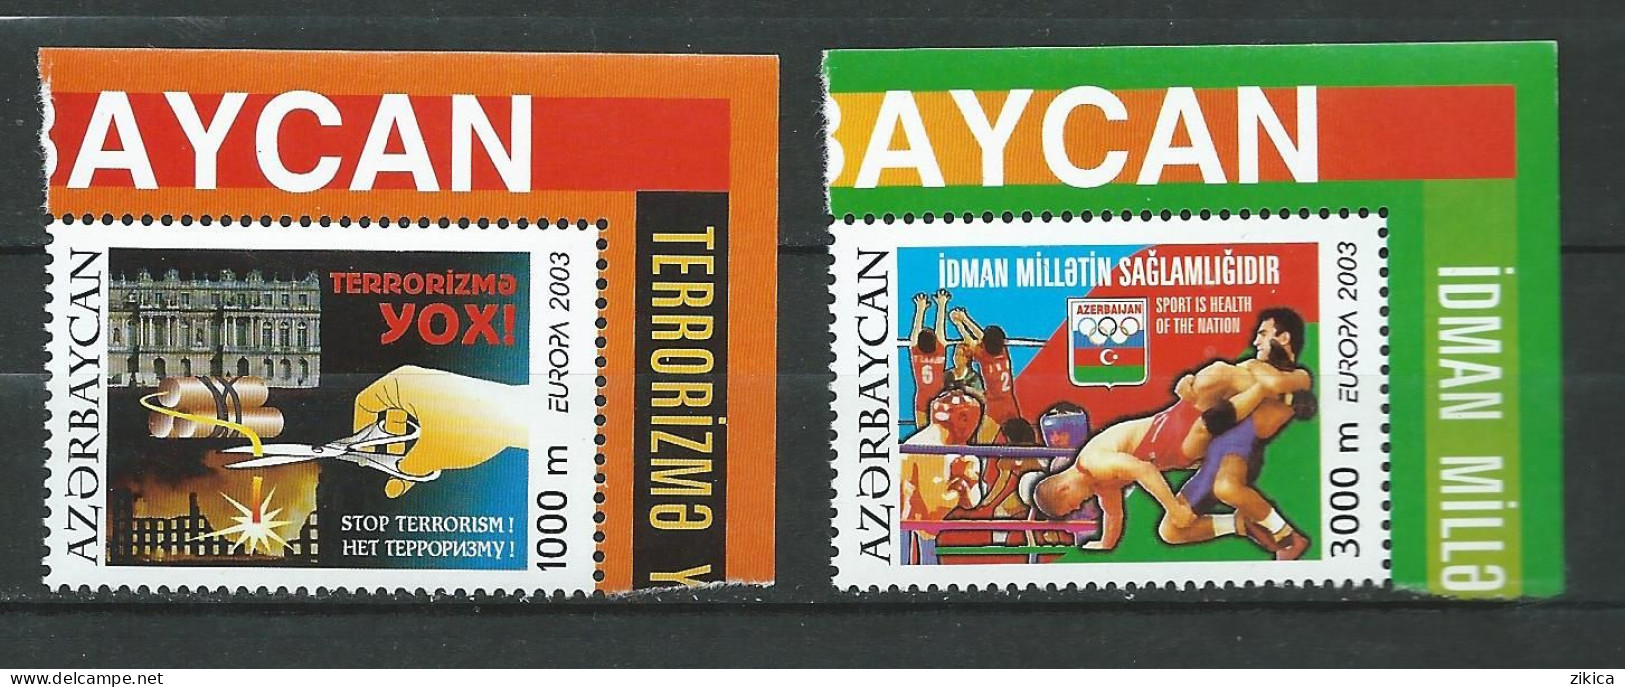 Azerbaijan - 2003 EUROPA Stamps - Poster Art  MNH** - Aserbaidschan